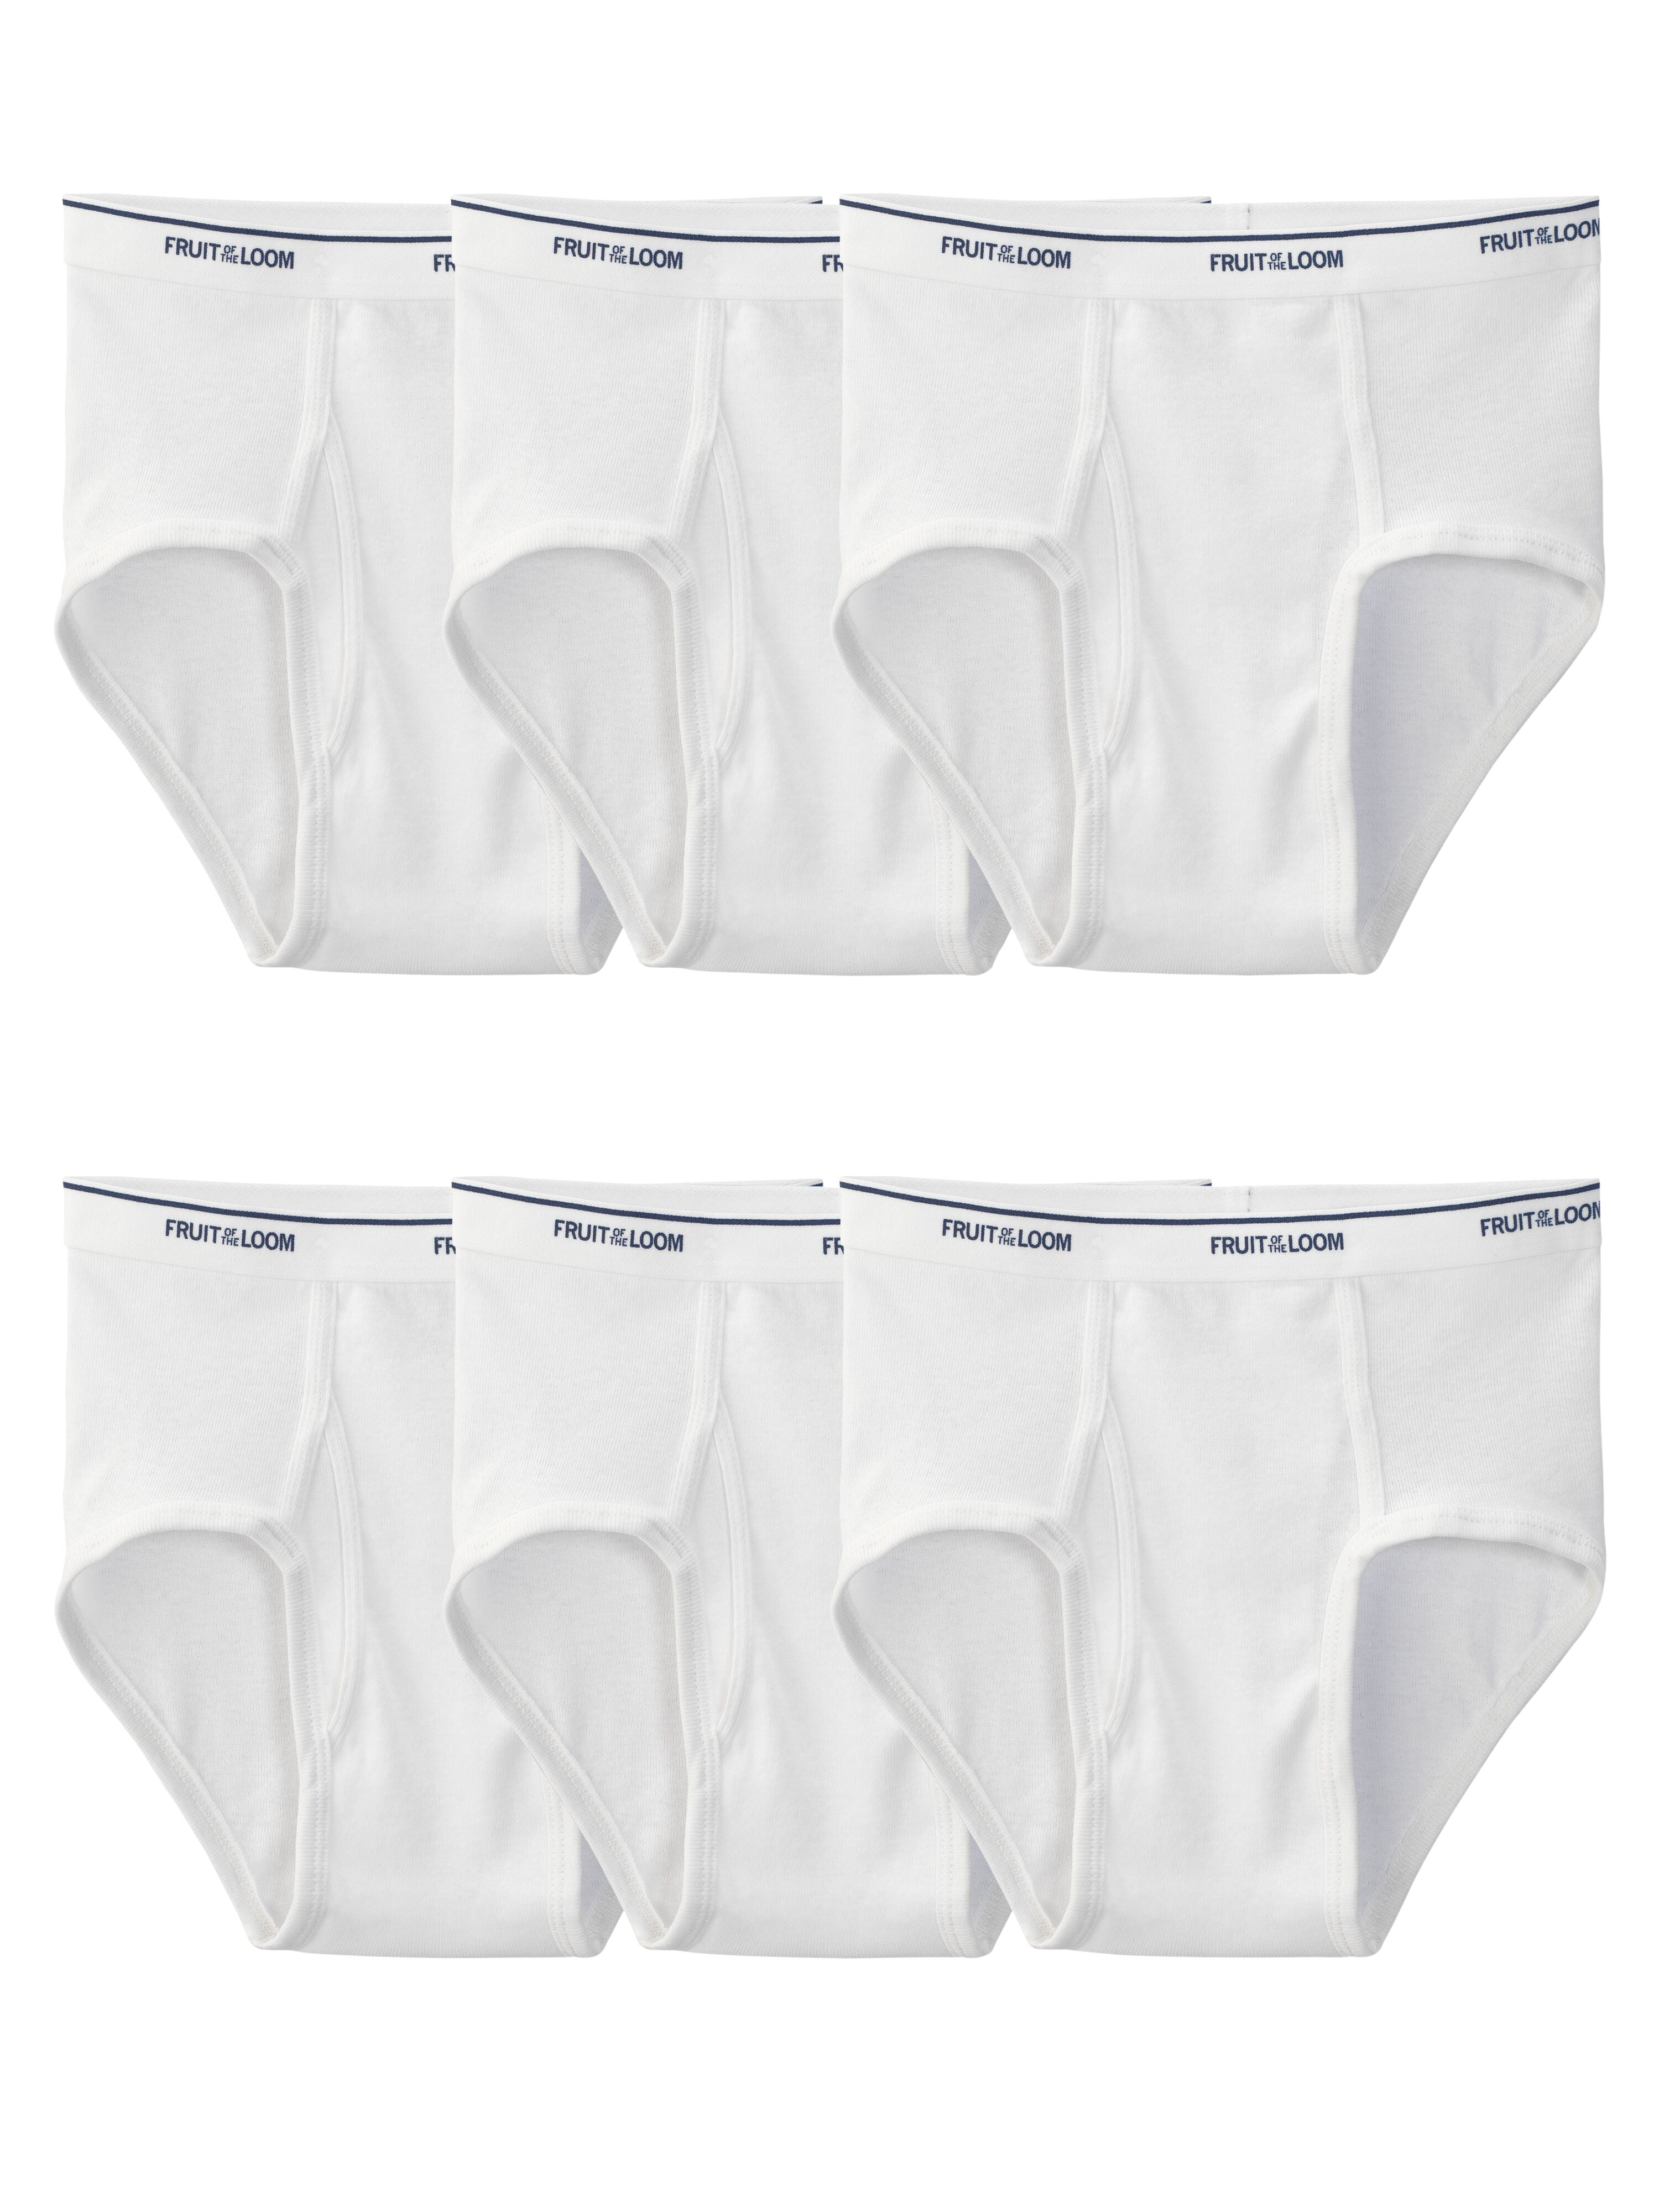 White Sexy Panties Men Briefs Strappy Underwear Lingerie - Milanoo.com